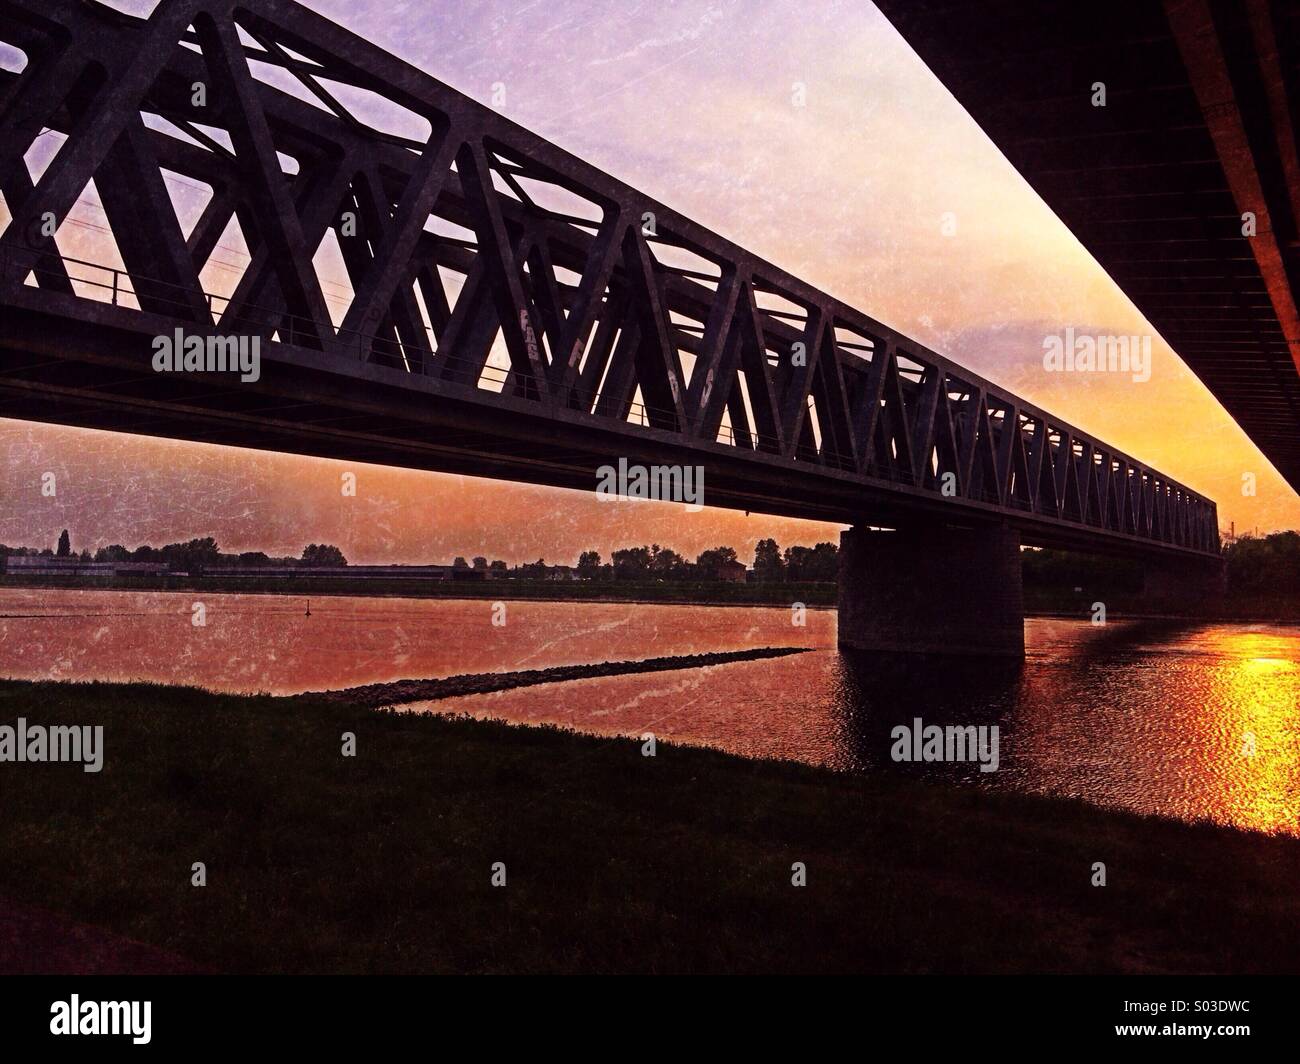 Railway Bridge and Road Bridge over the River Rhine at Sunset Stock Photo